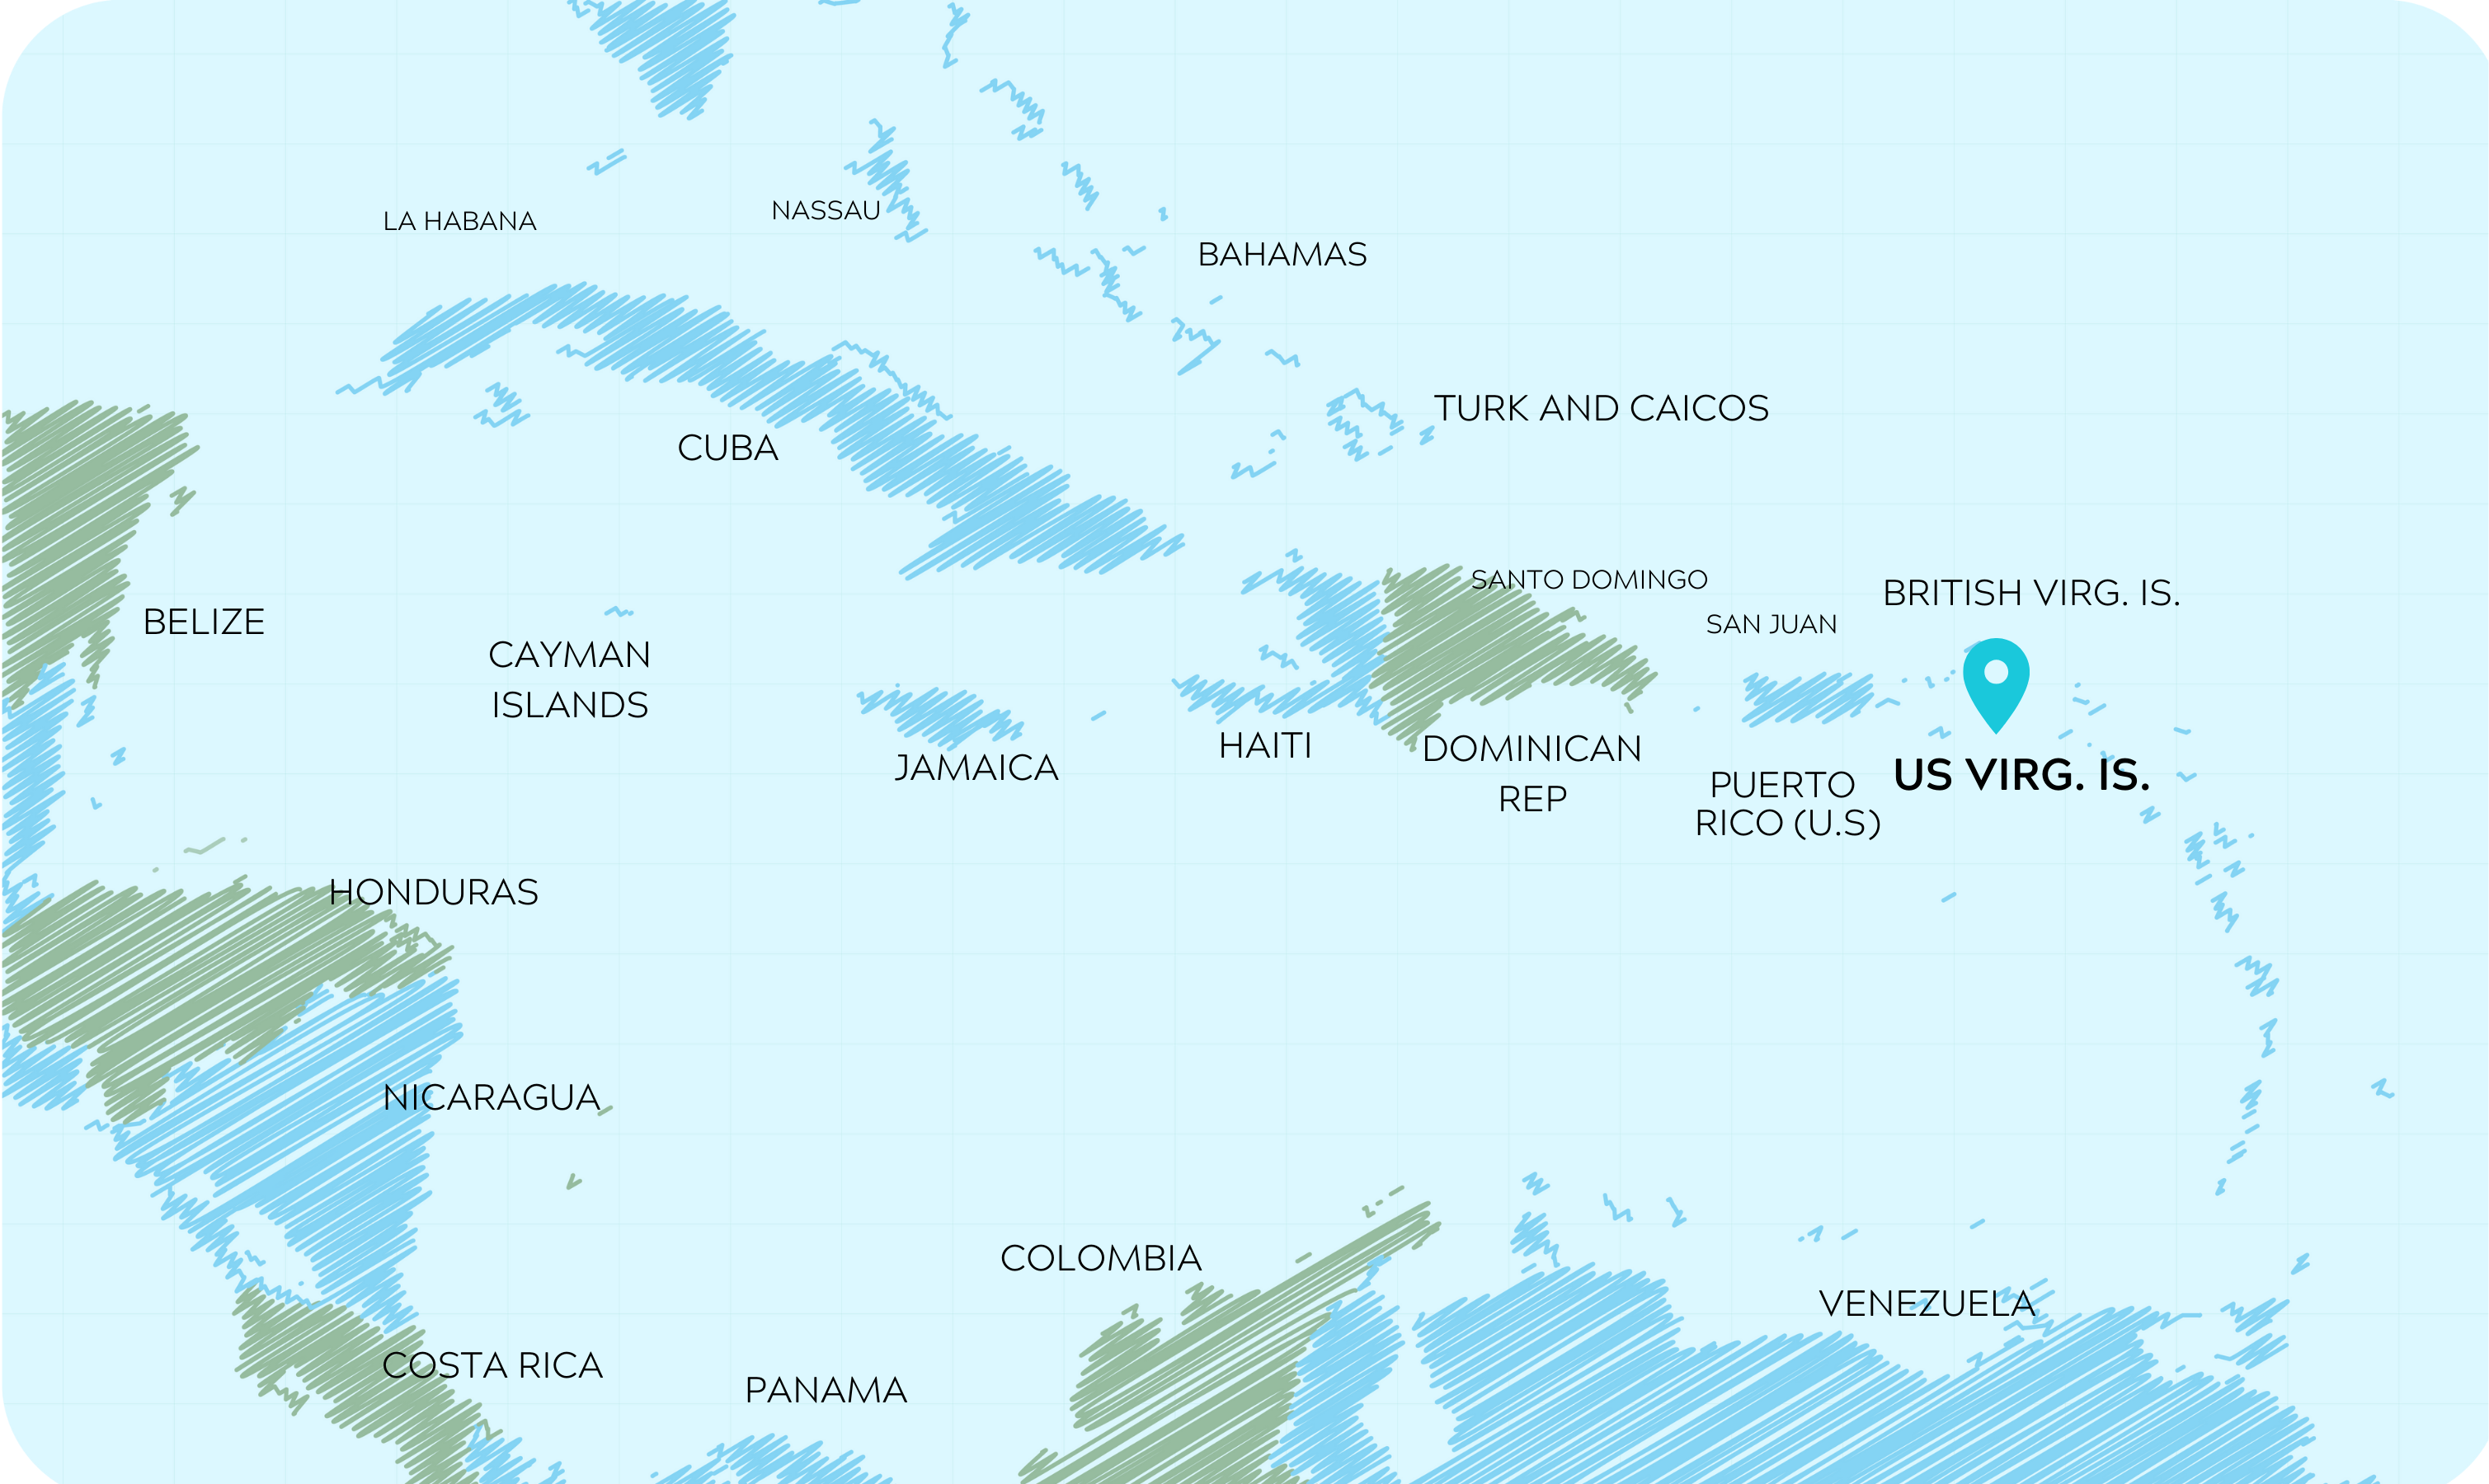 United States Virgin Islands Map